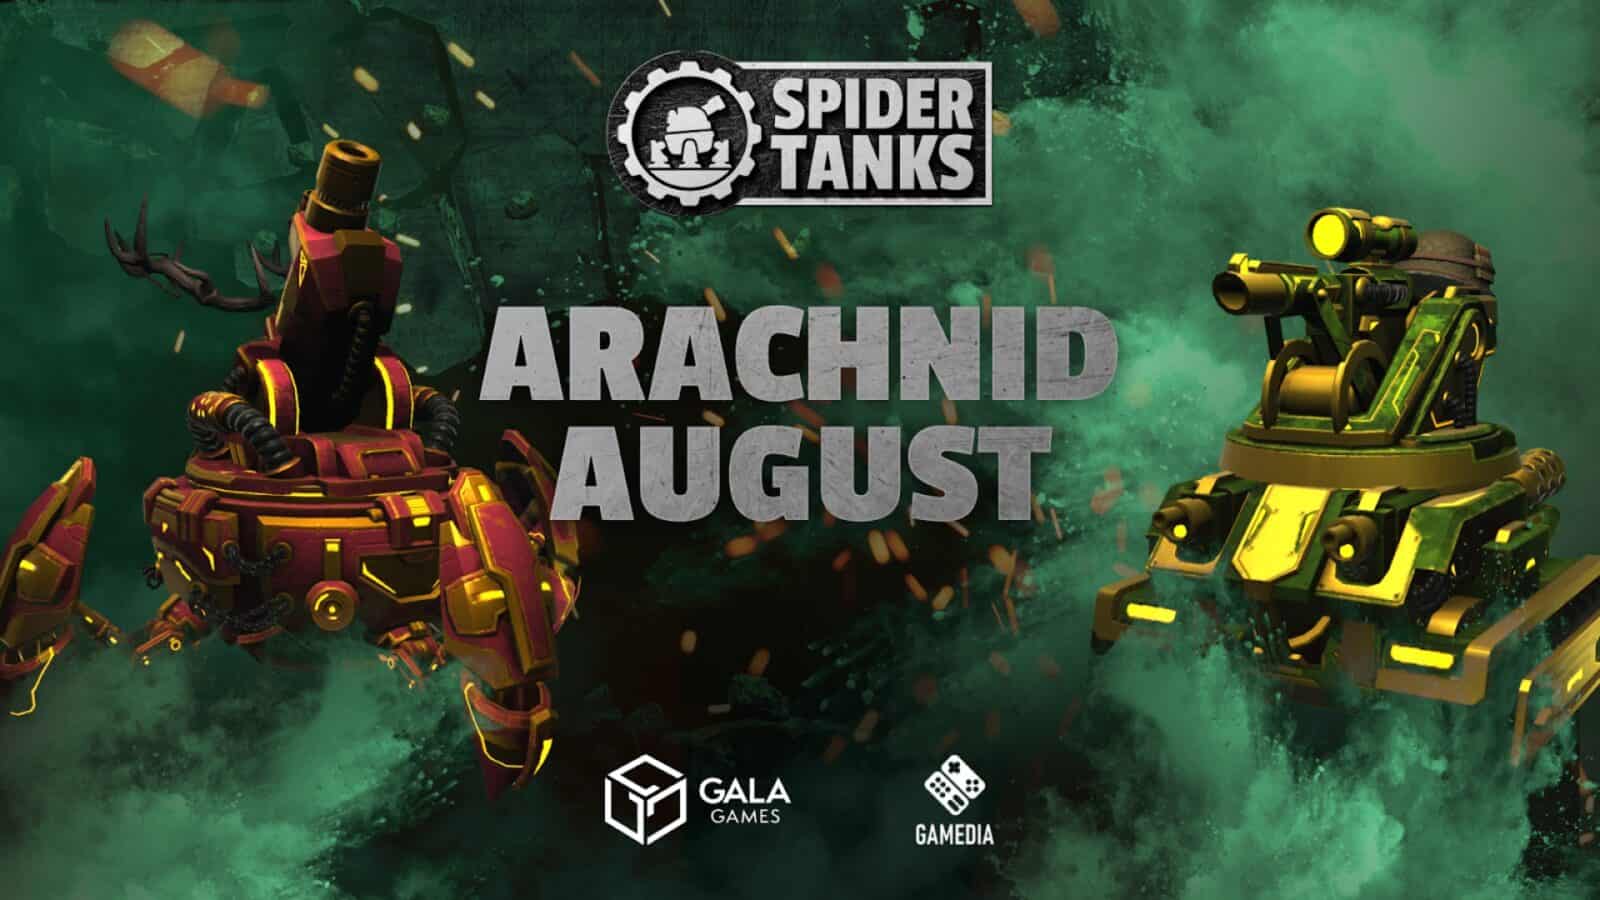 Spider Tanks Epic Arena Challenge: Arachnid August Takes Flight